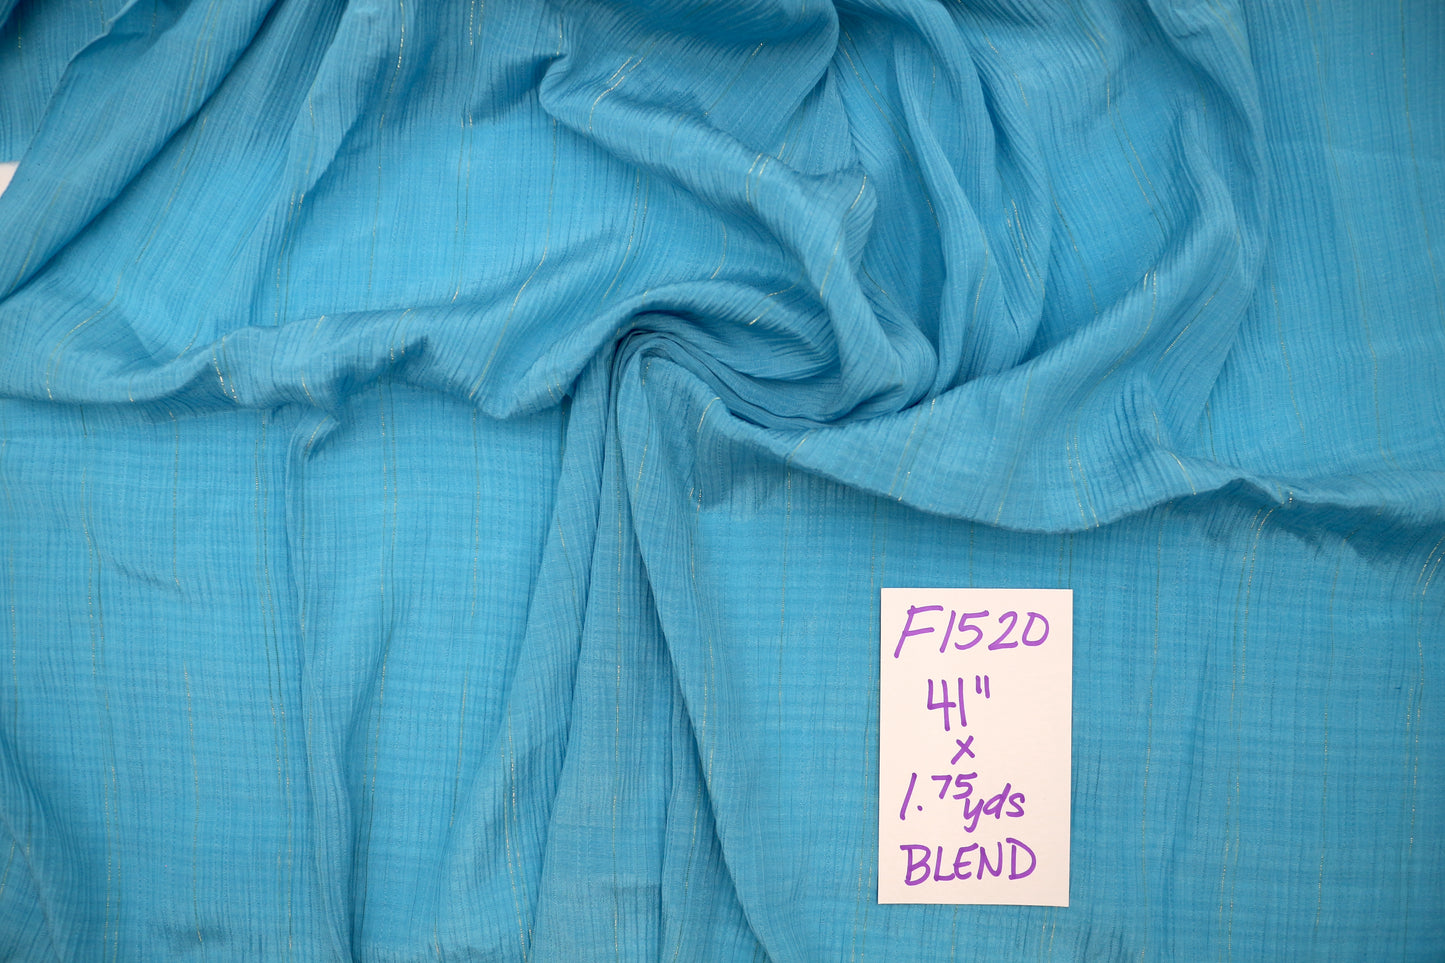 Jazzy's Blue Nights Blend Fabric 41" x 1.75 yds